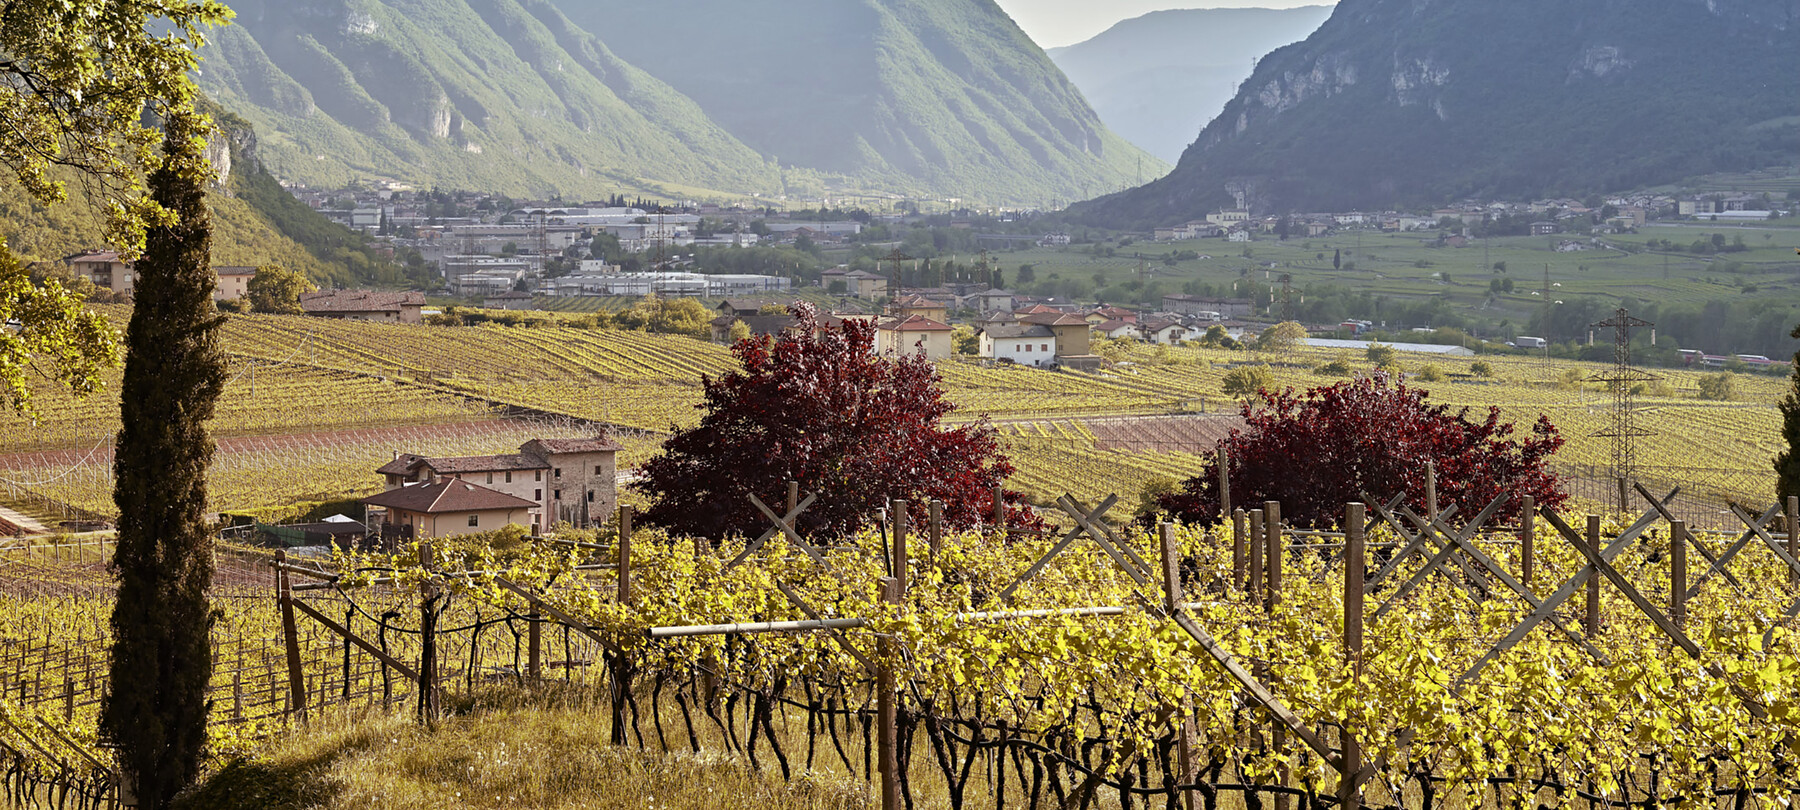 Wine tourism: discovering Marzemino in Vallagarina